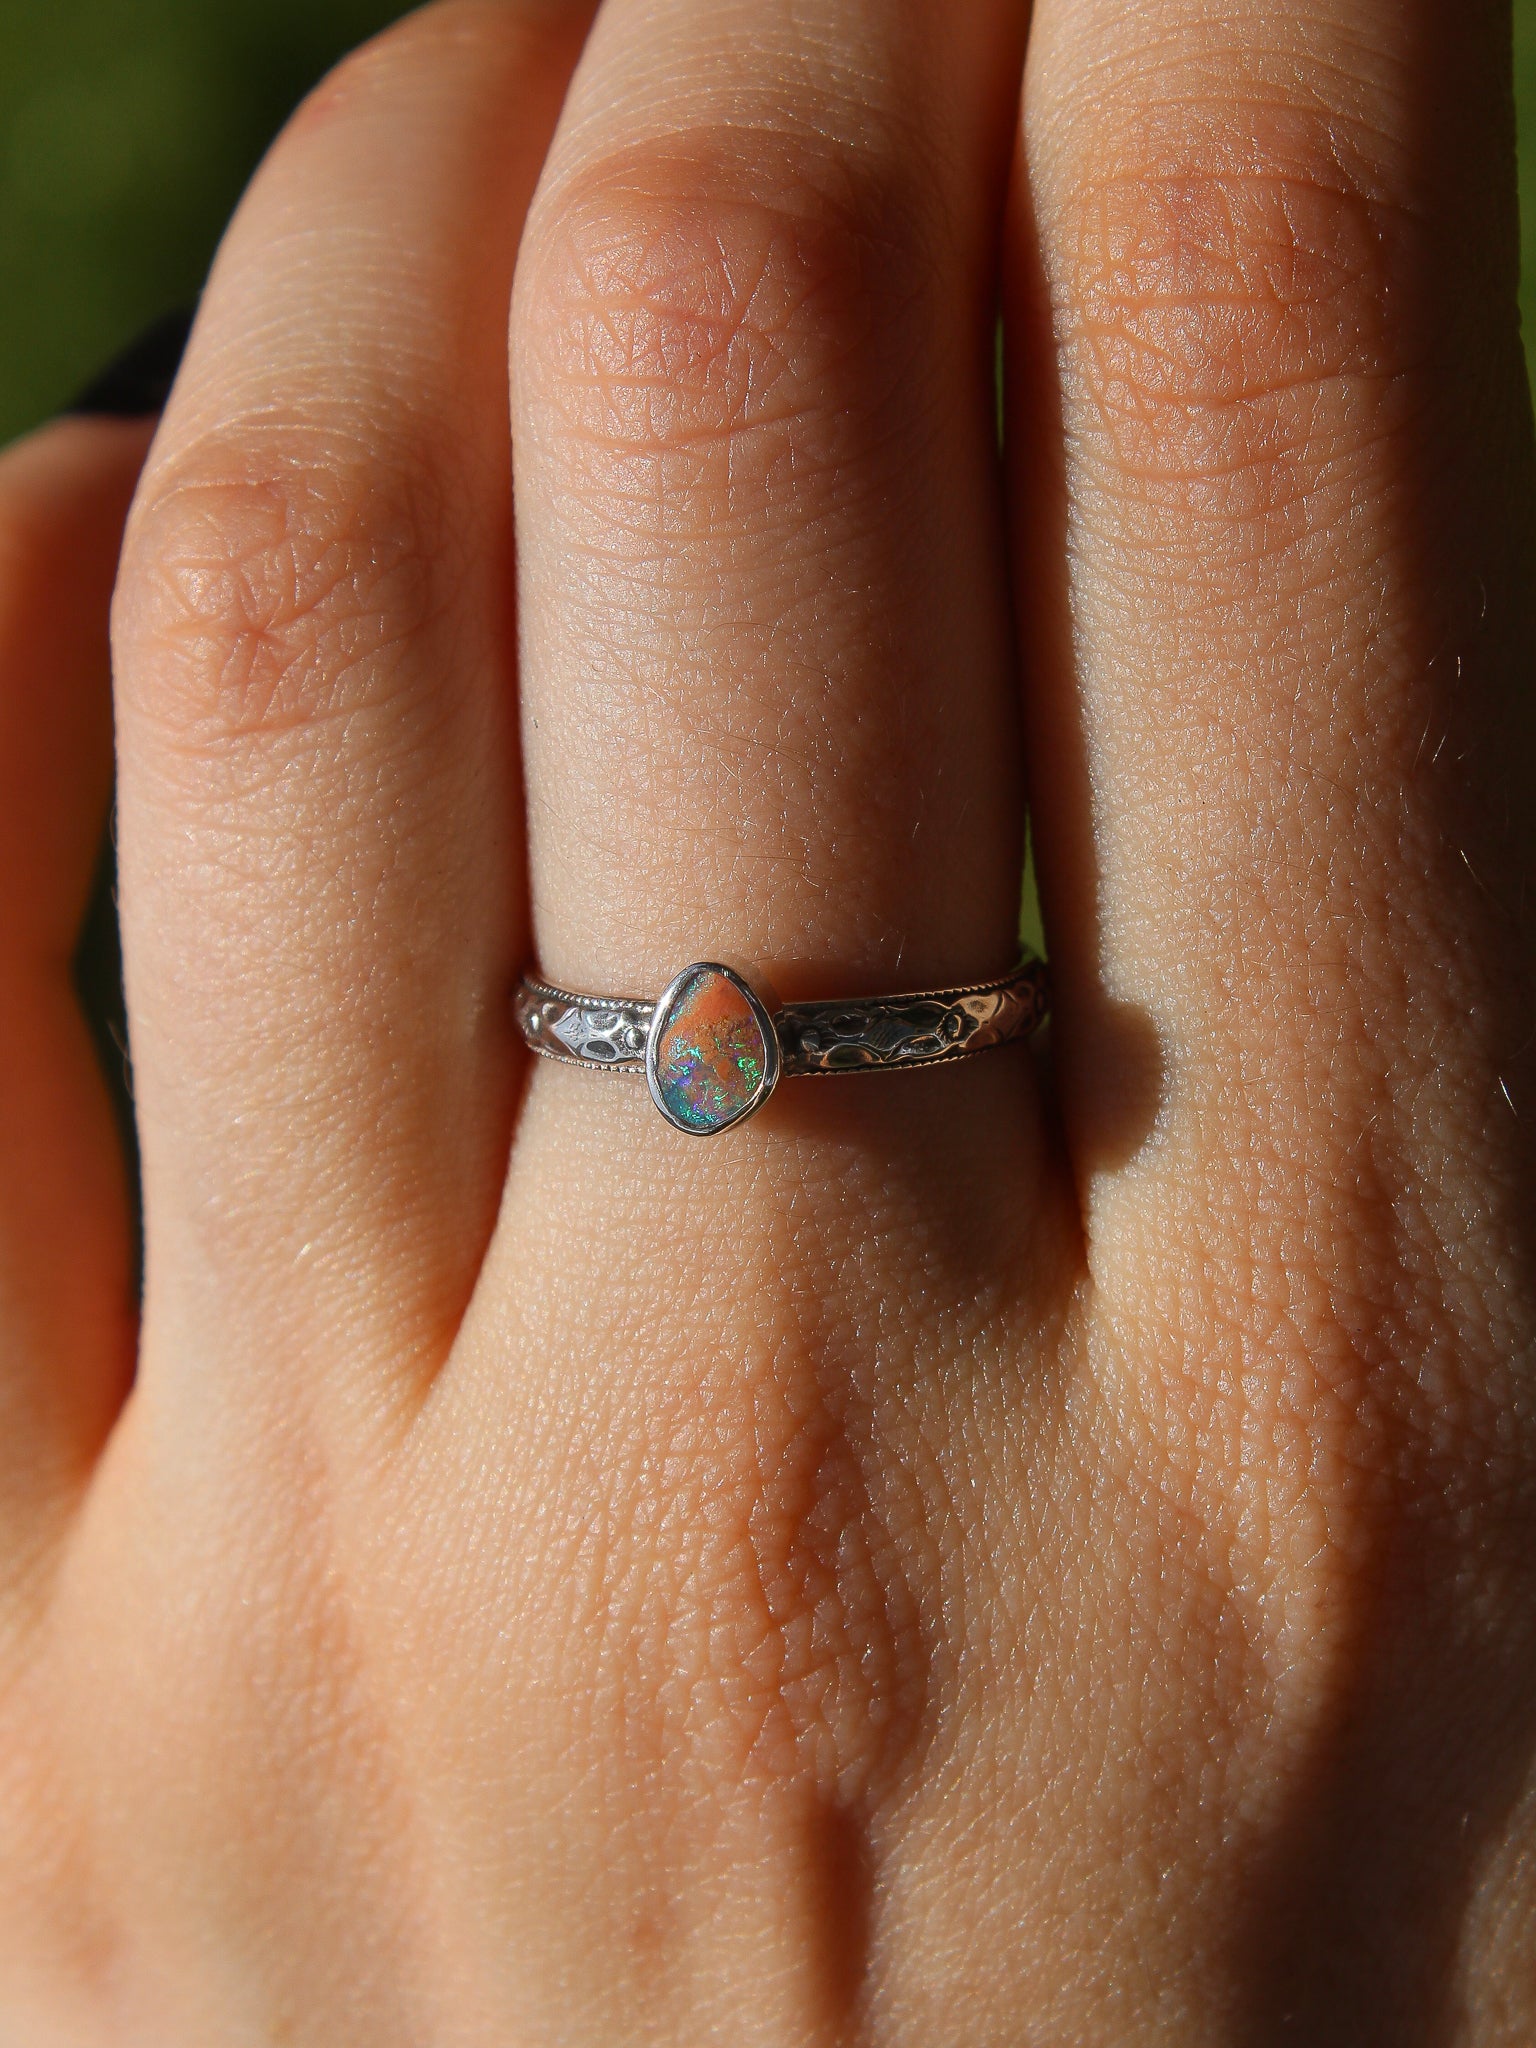 Australian Boulder Opal Ring - Size 7.5